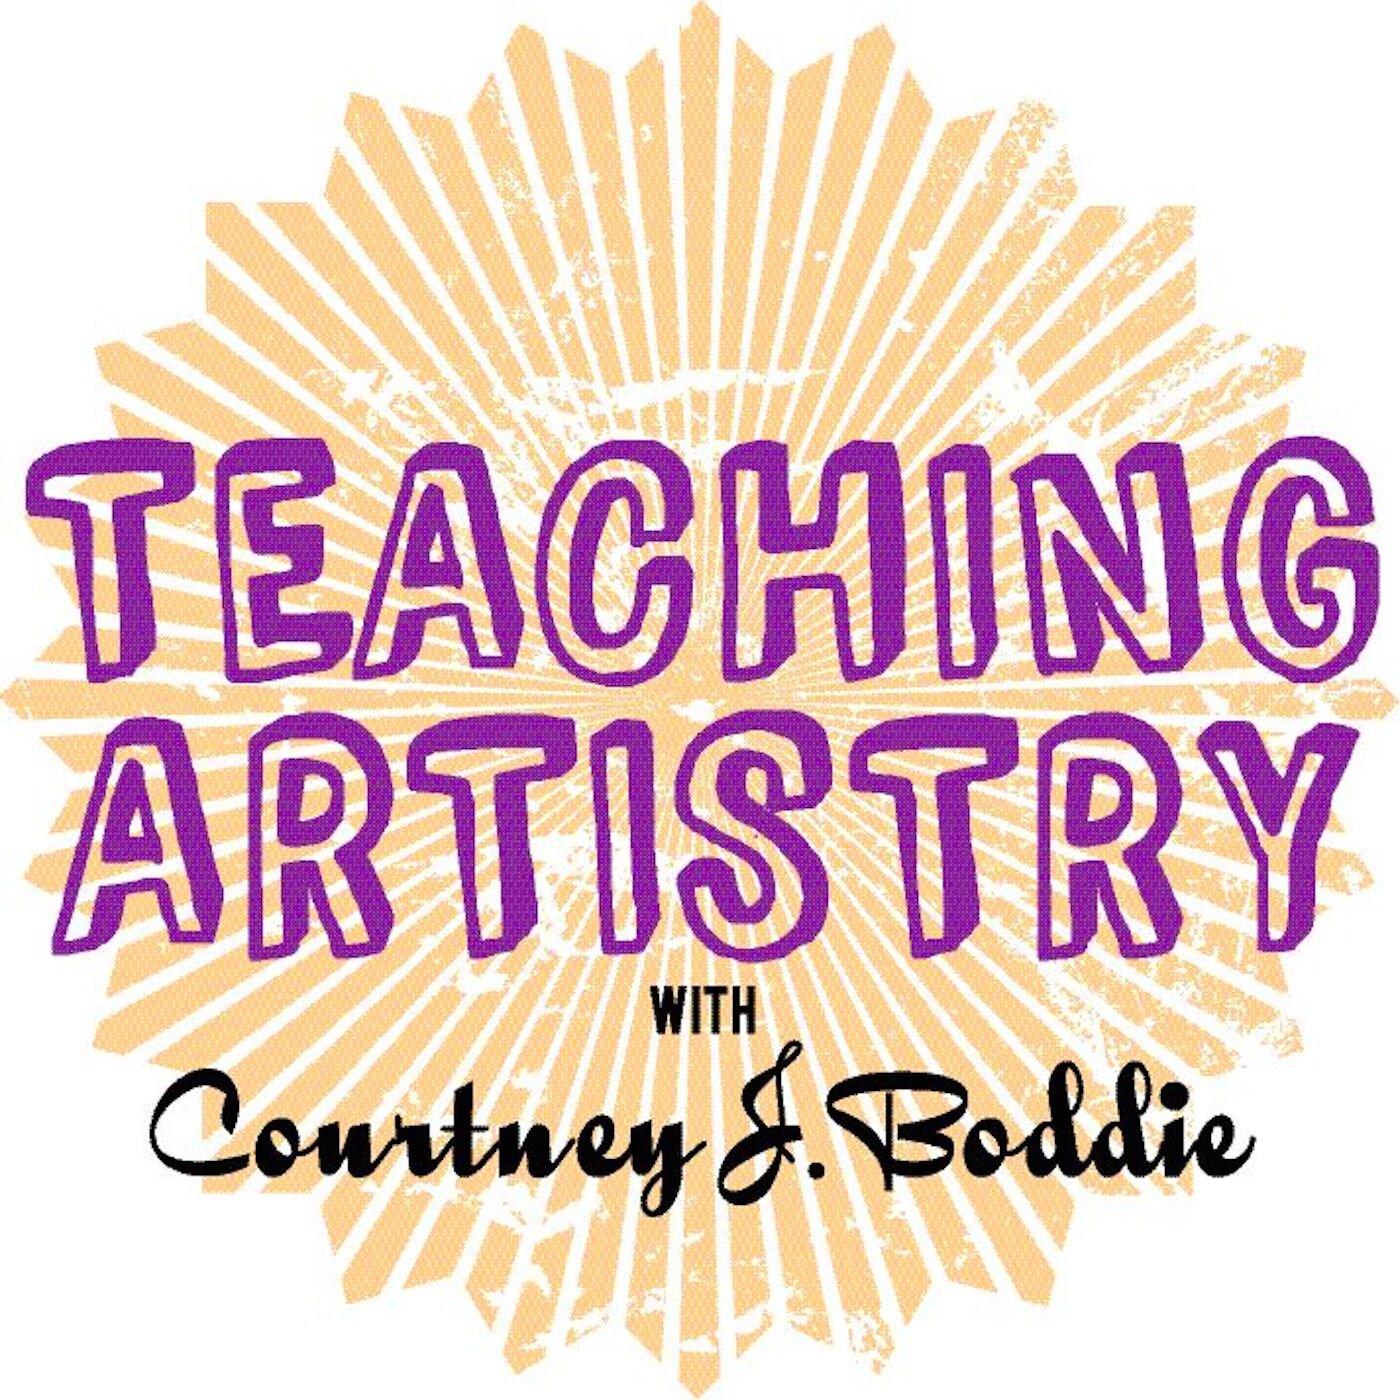 Teaching Artistry with Courtney J Boddie.jpg